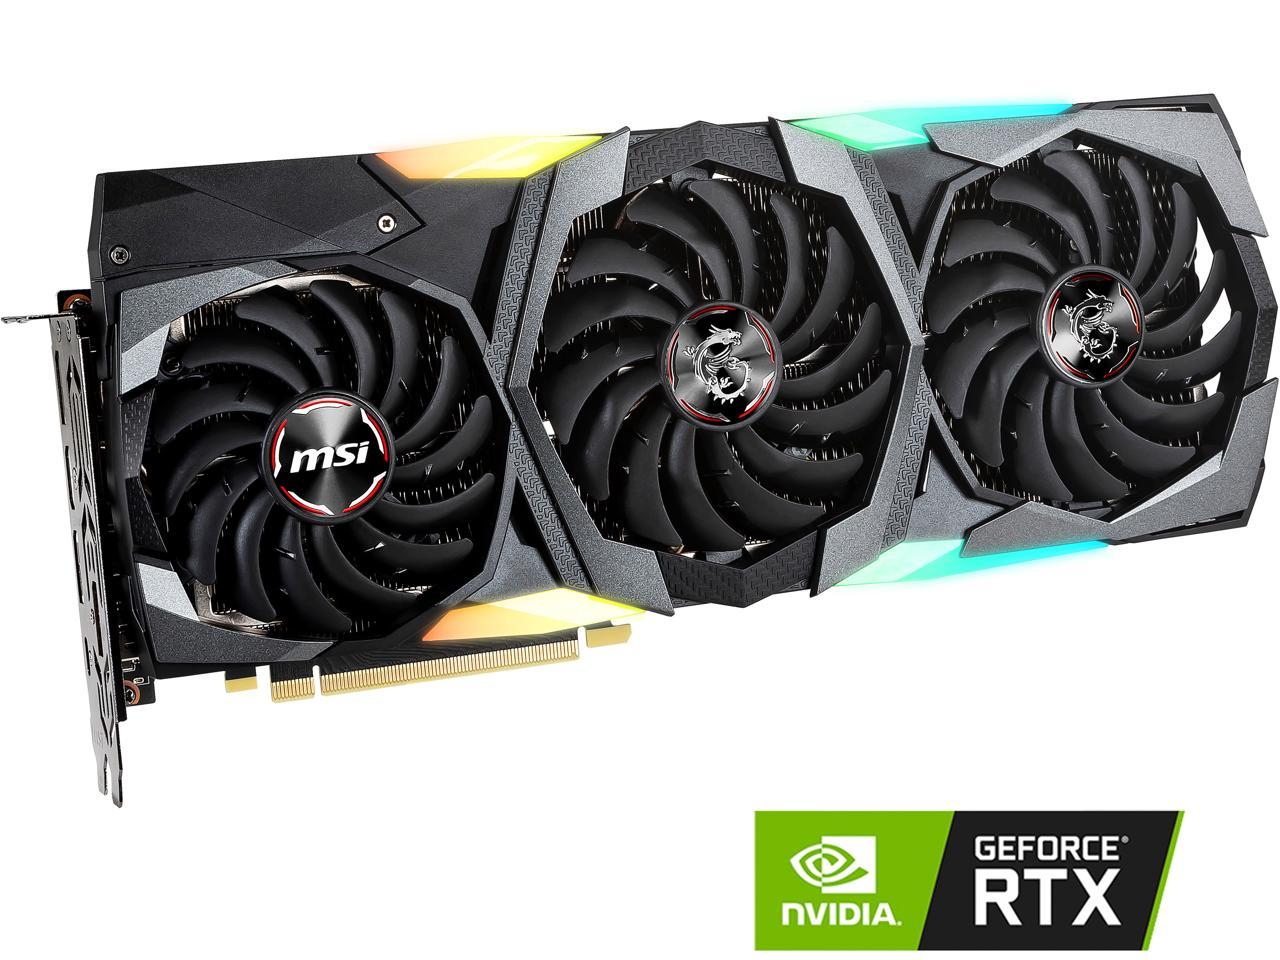 MSI GeForce RTX 2080 GAMING X TRIO Video Card - Newegg.com